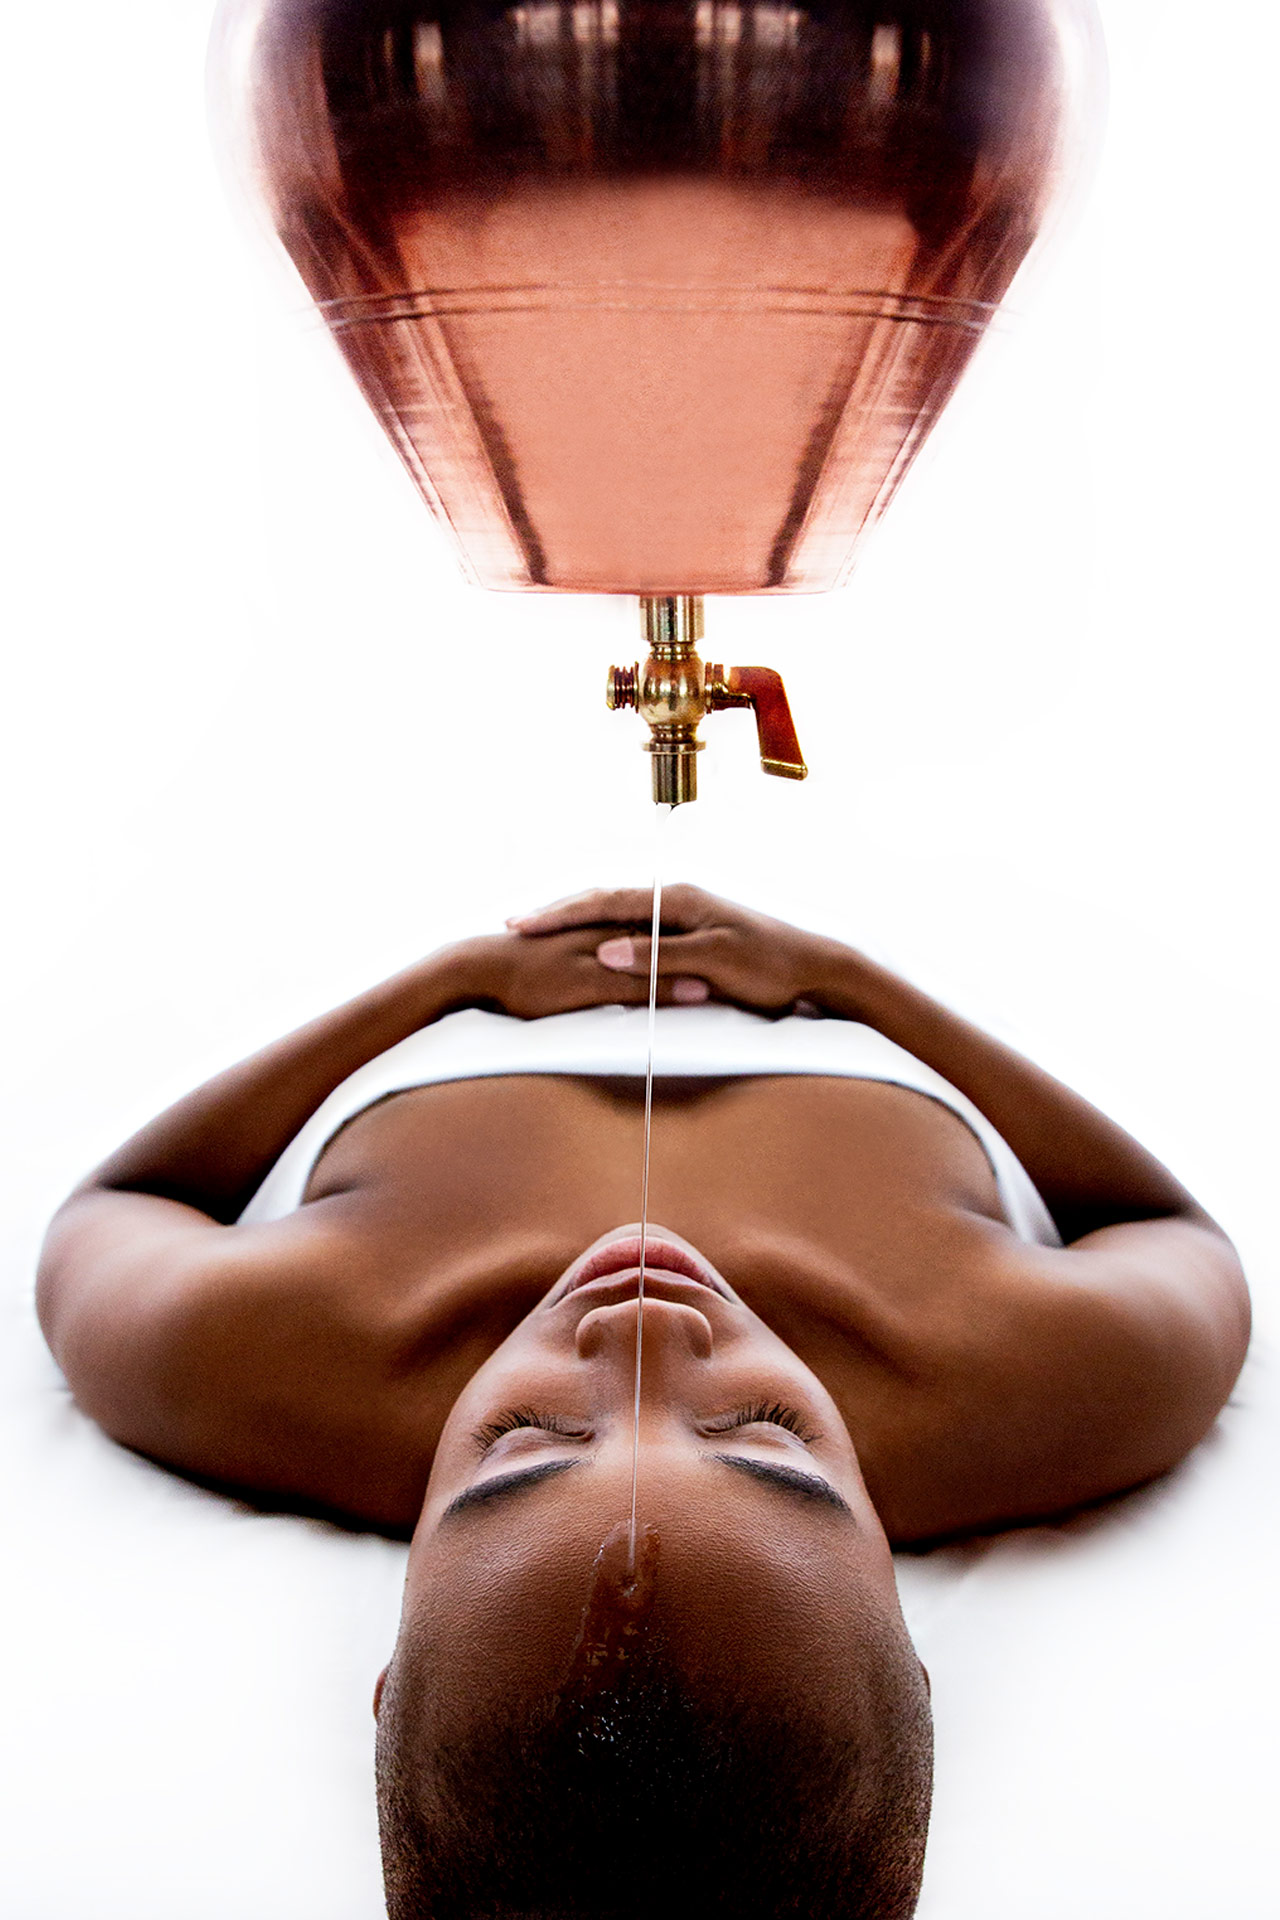 a woman getting a spa treatment where a liquid is dripped onto her head